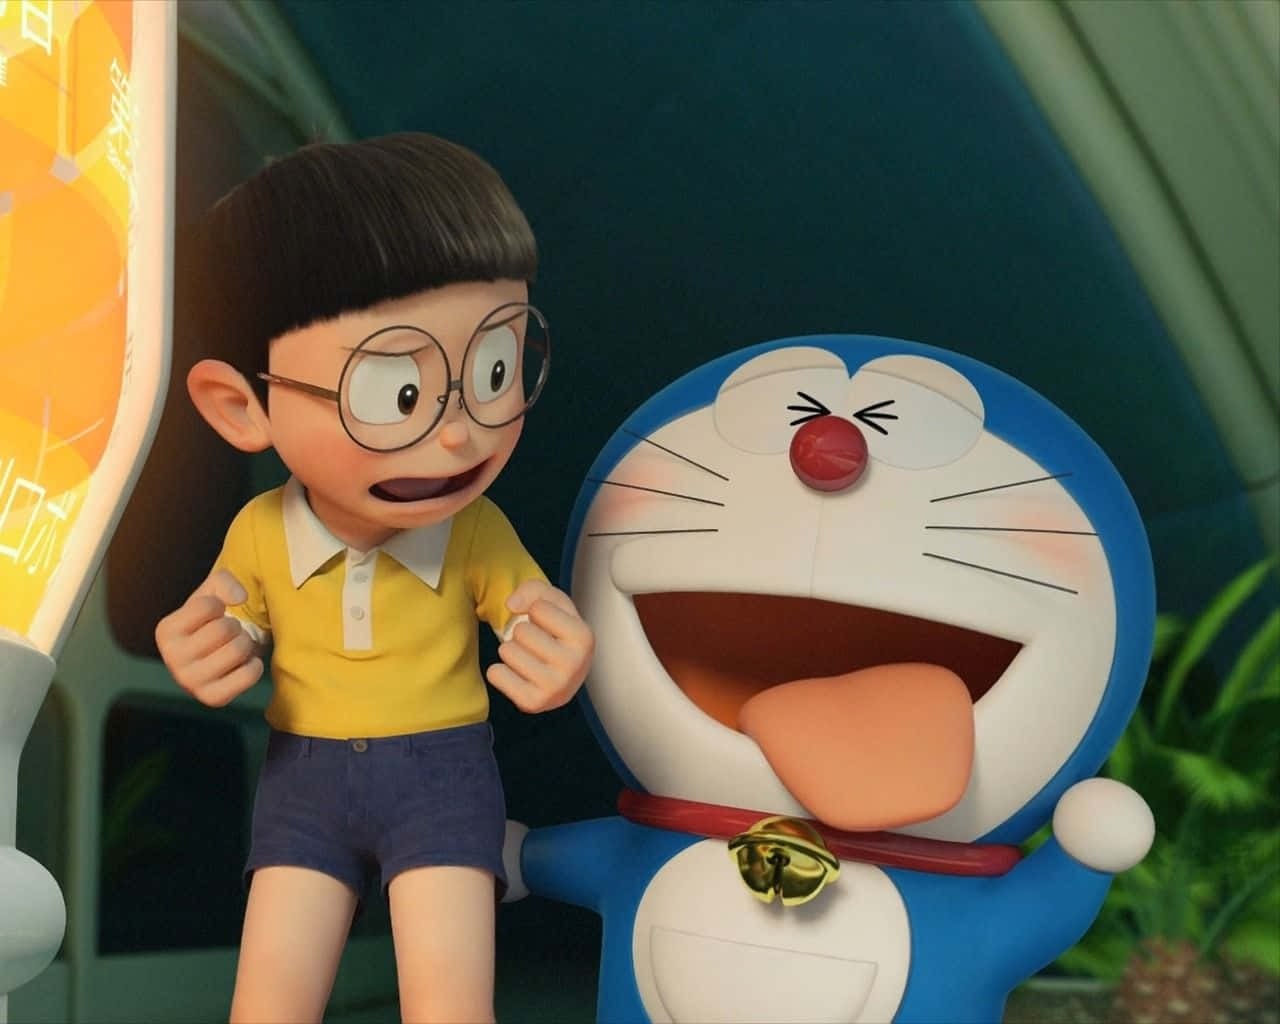 Gladeøjeblikke Med Doraemon!